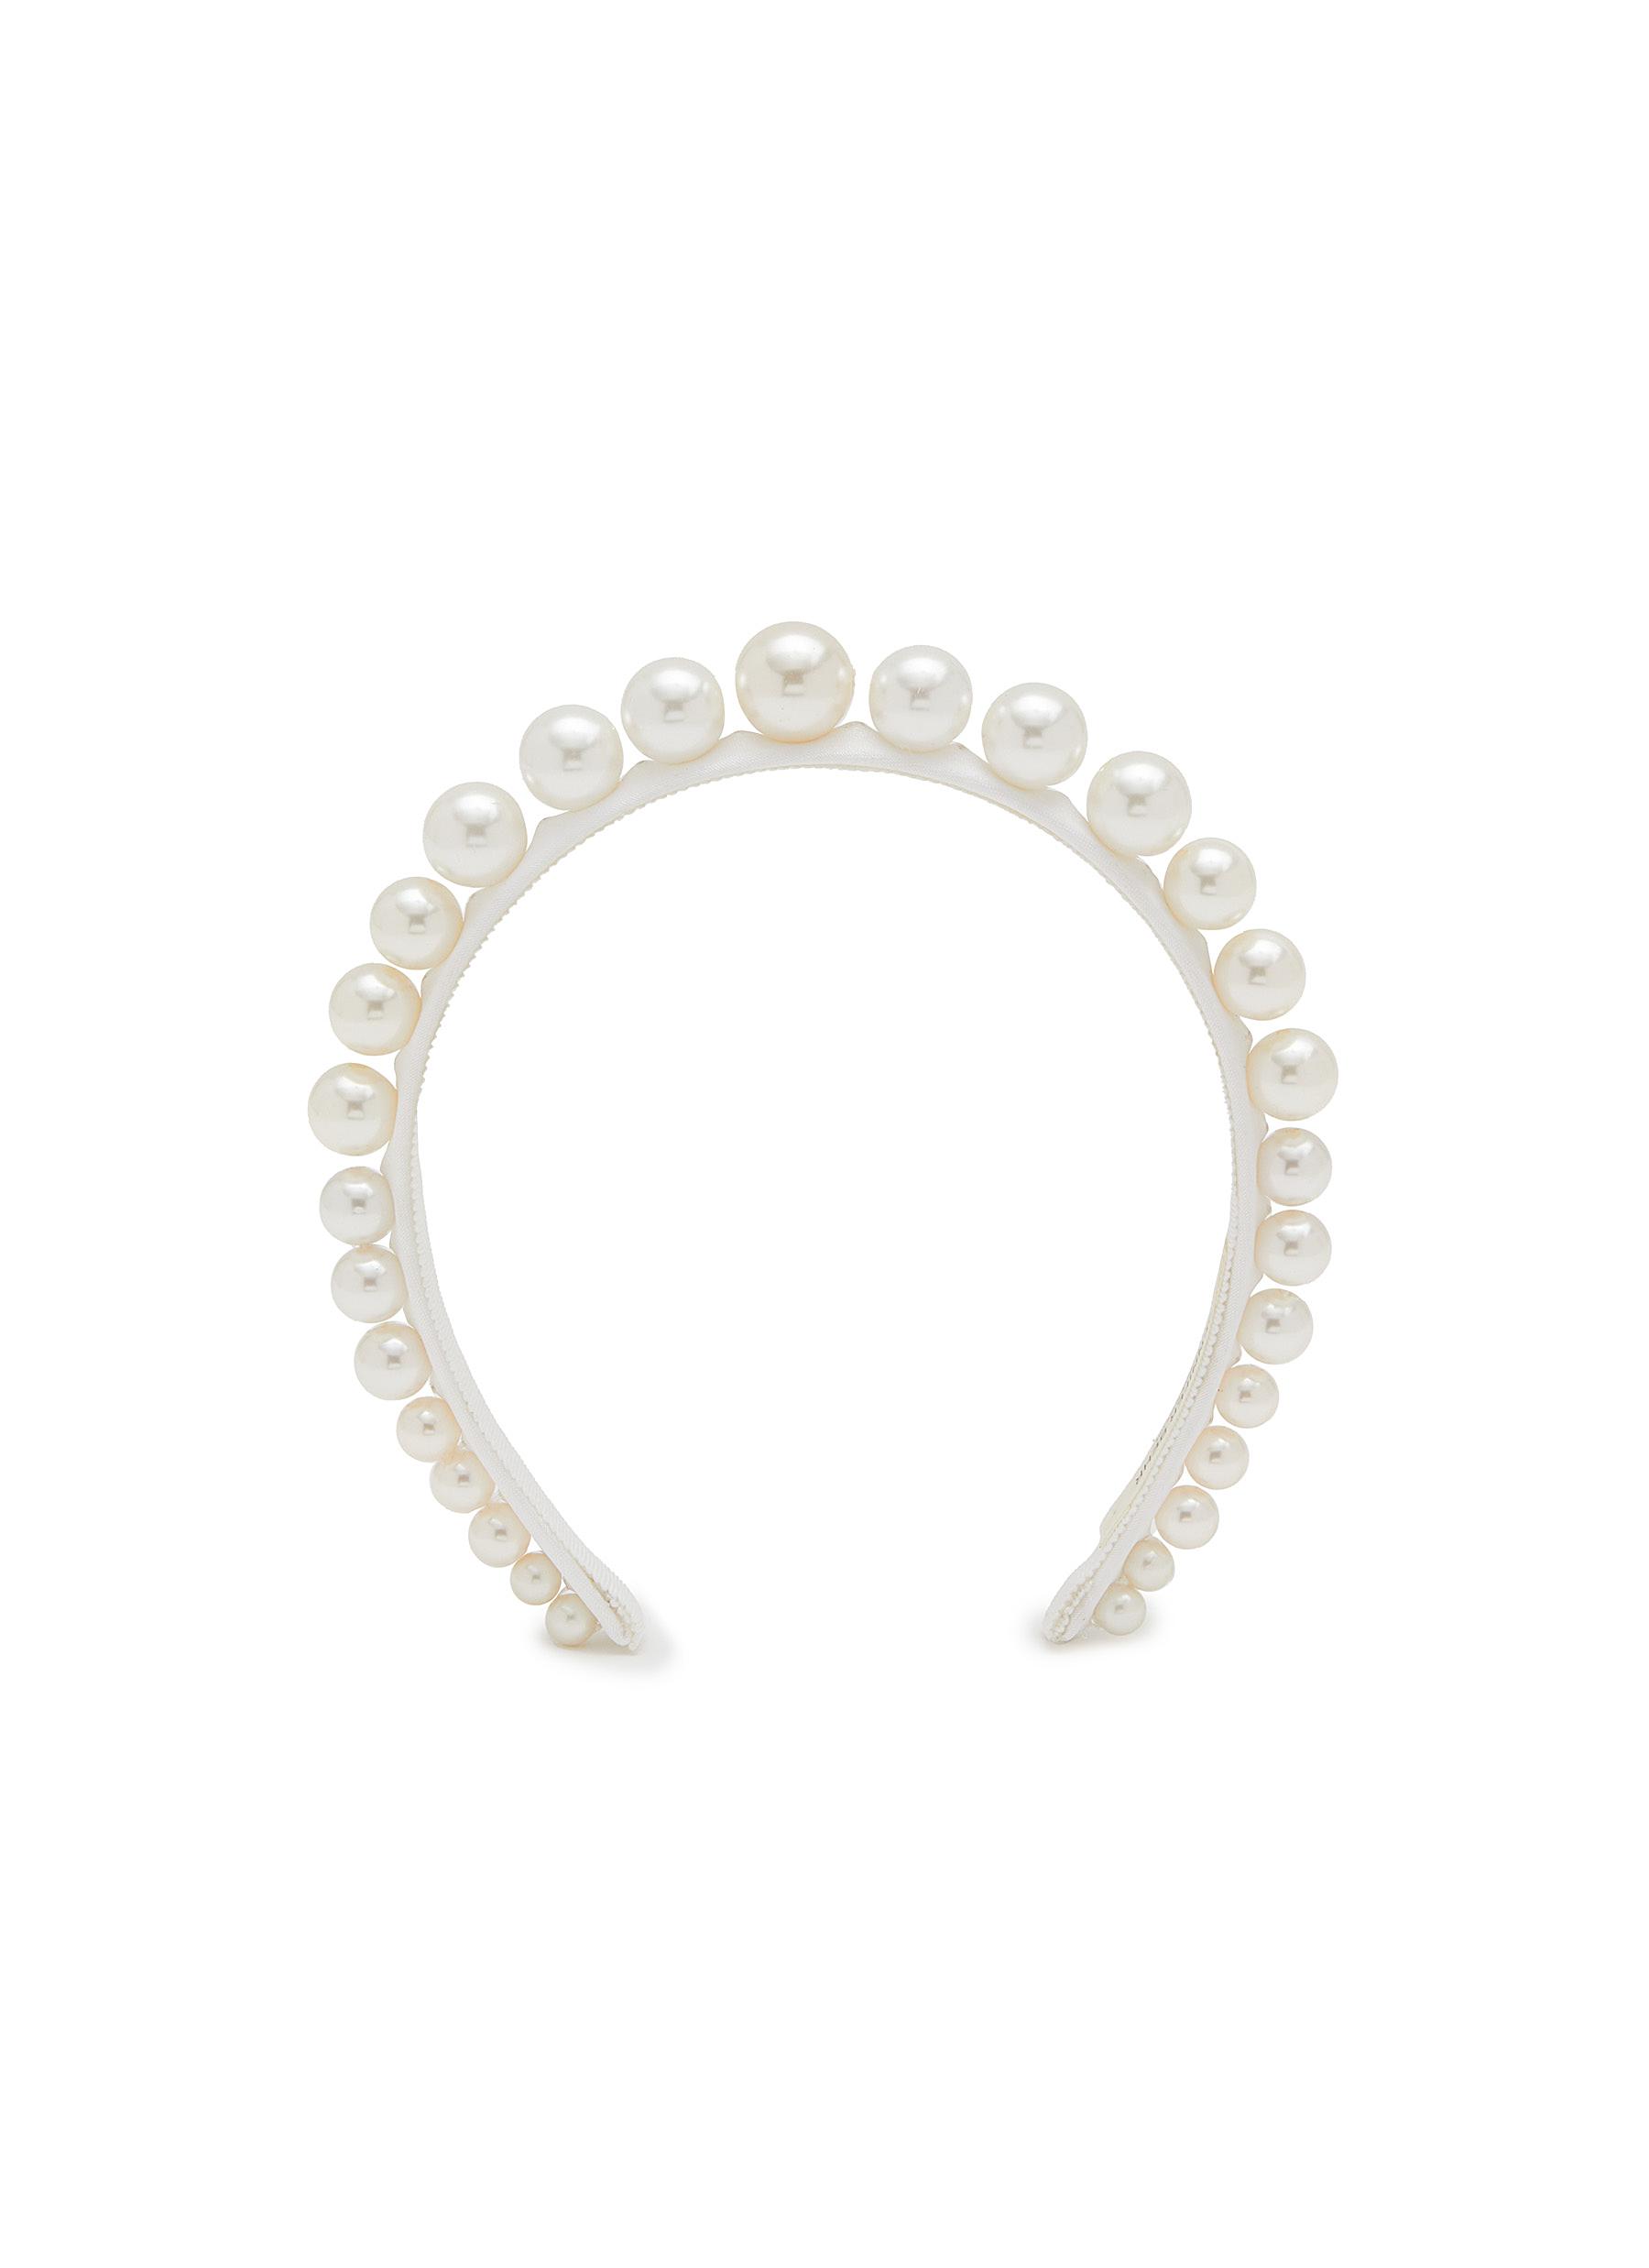 Perlina Hande Embroidered Pearls And Crystals Headband